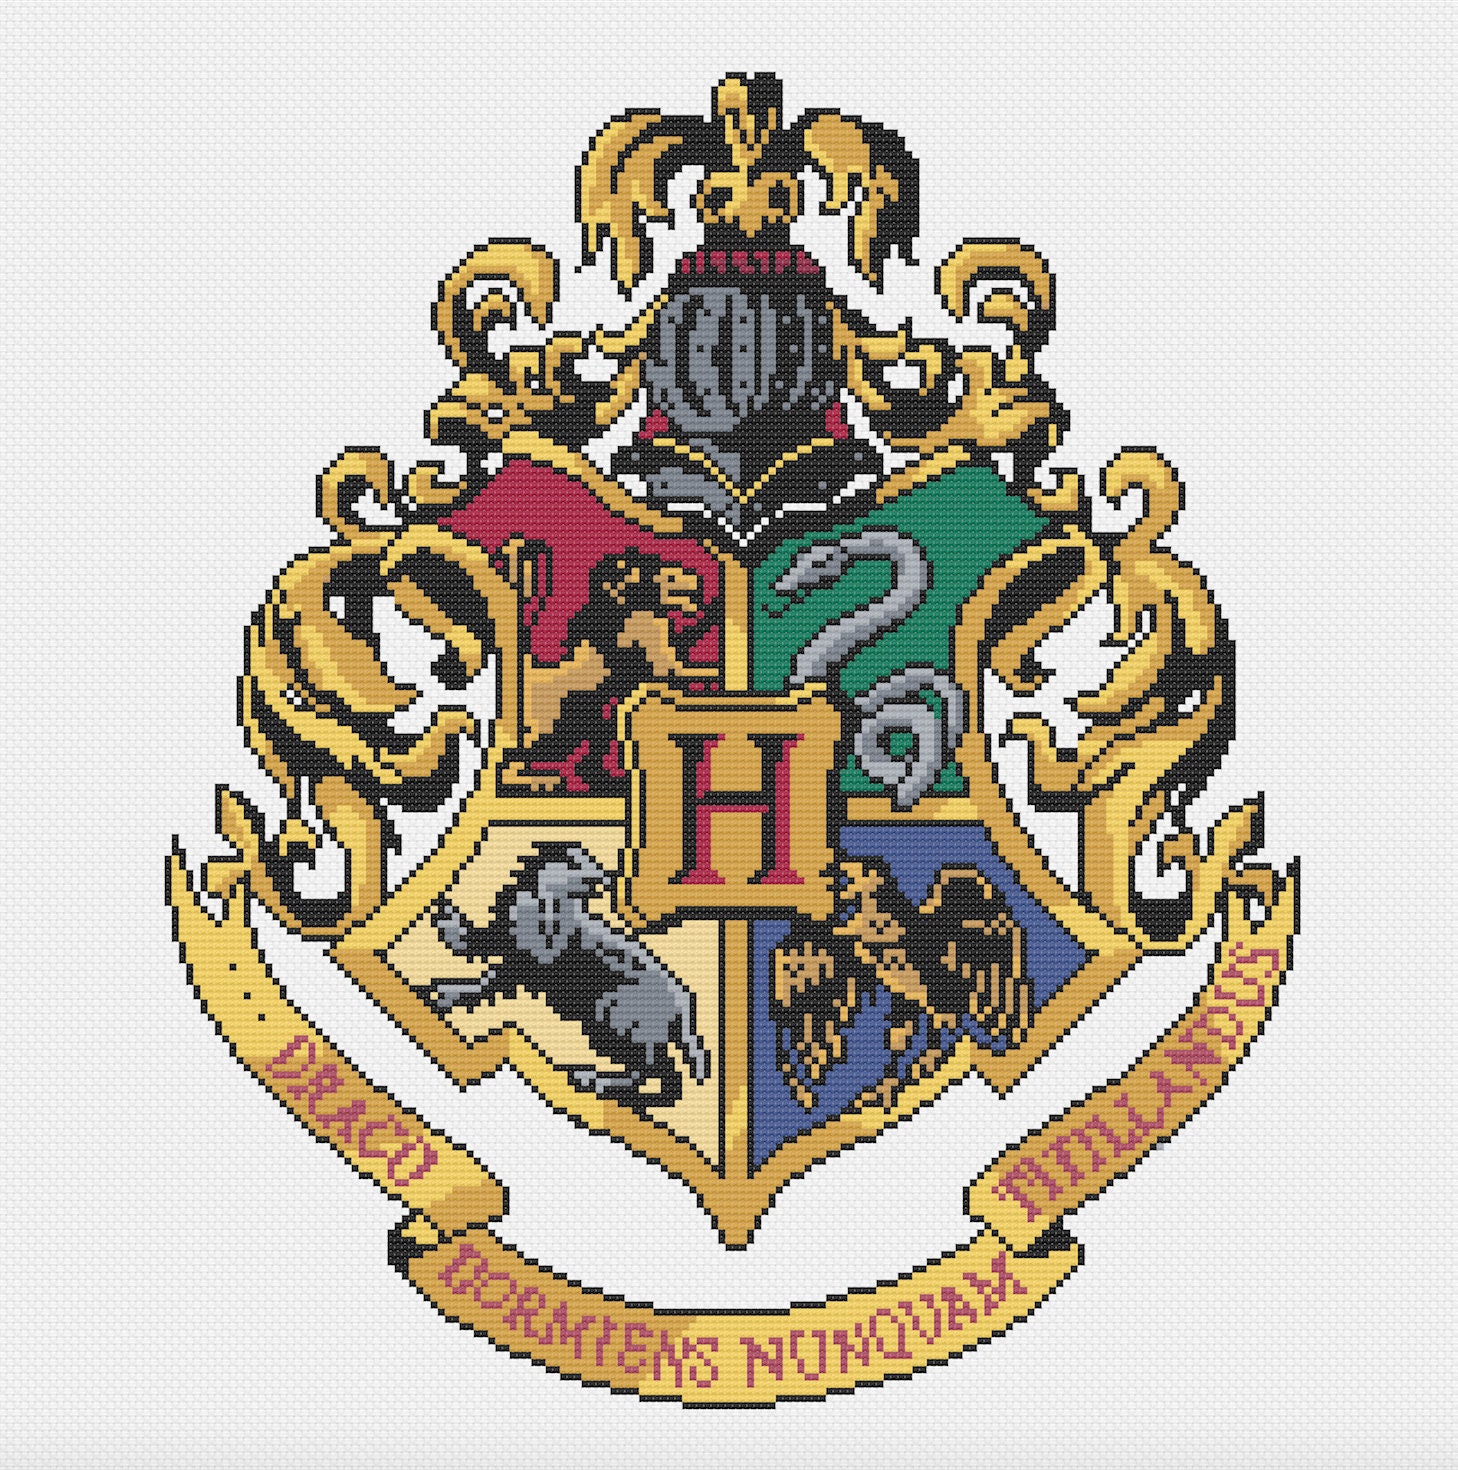 Apr 18, 2017 - Seal Pattern: Hogwarts Badge 1 1/4 round delicate